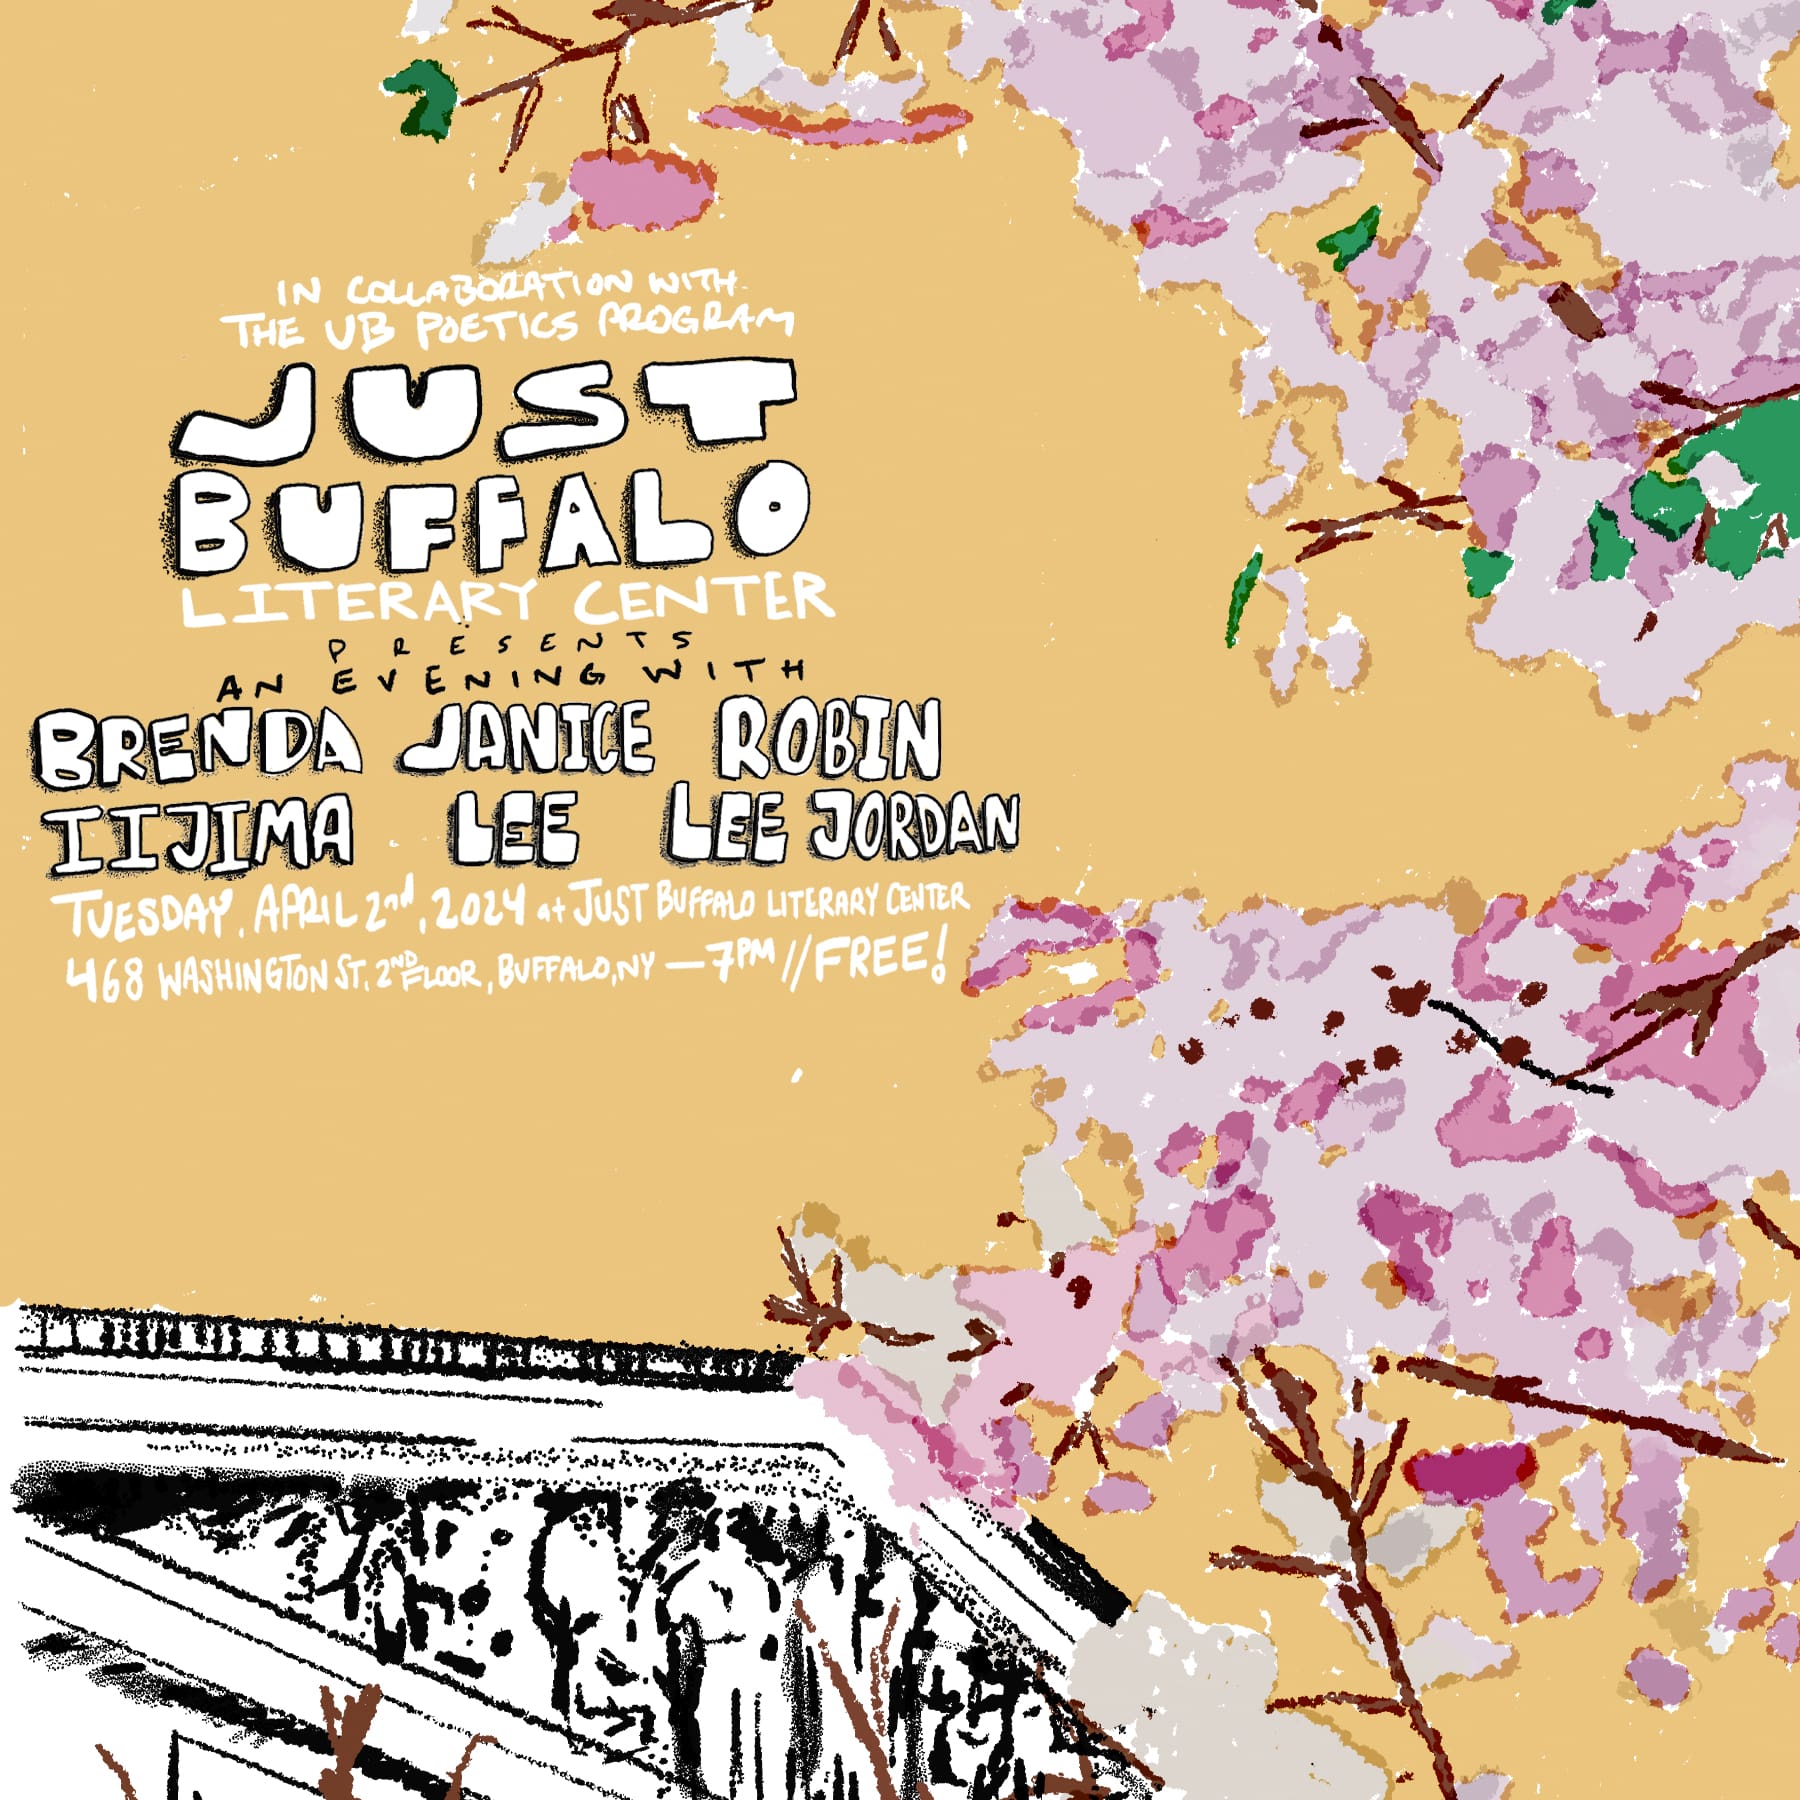 UB Poetics + Just Buffalo present Brenda Iijima, Janice Lee, & Robin Lee Jordan // graphic by Zach Pape